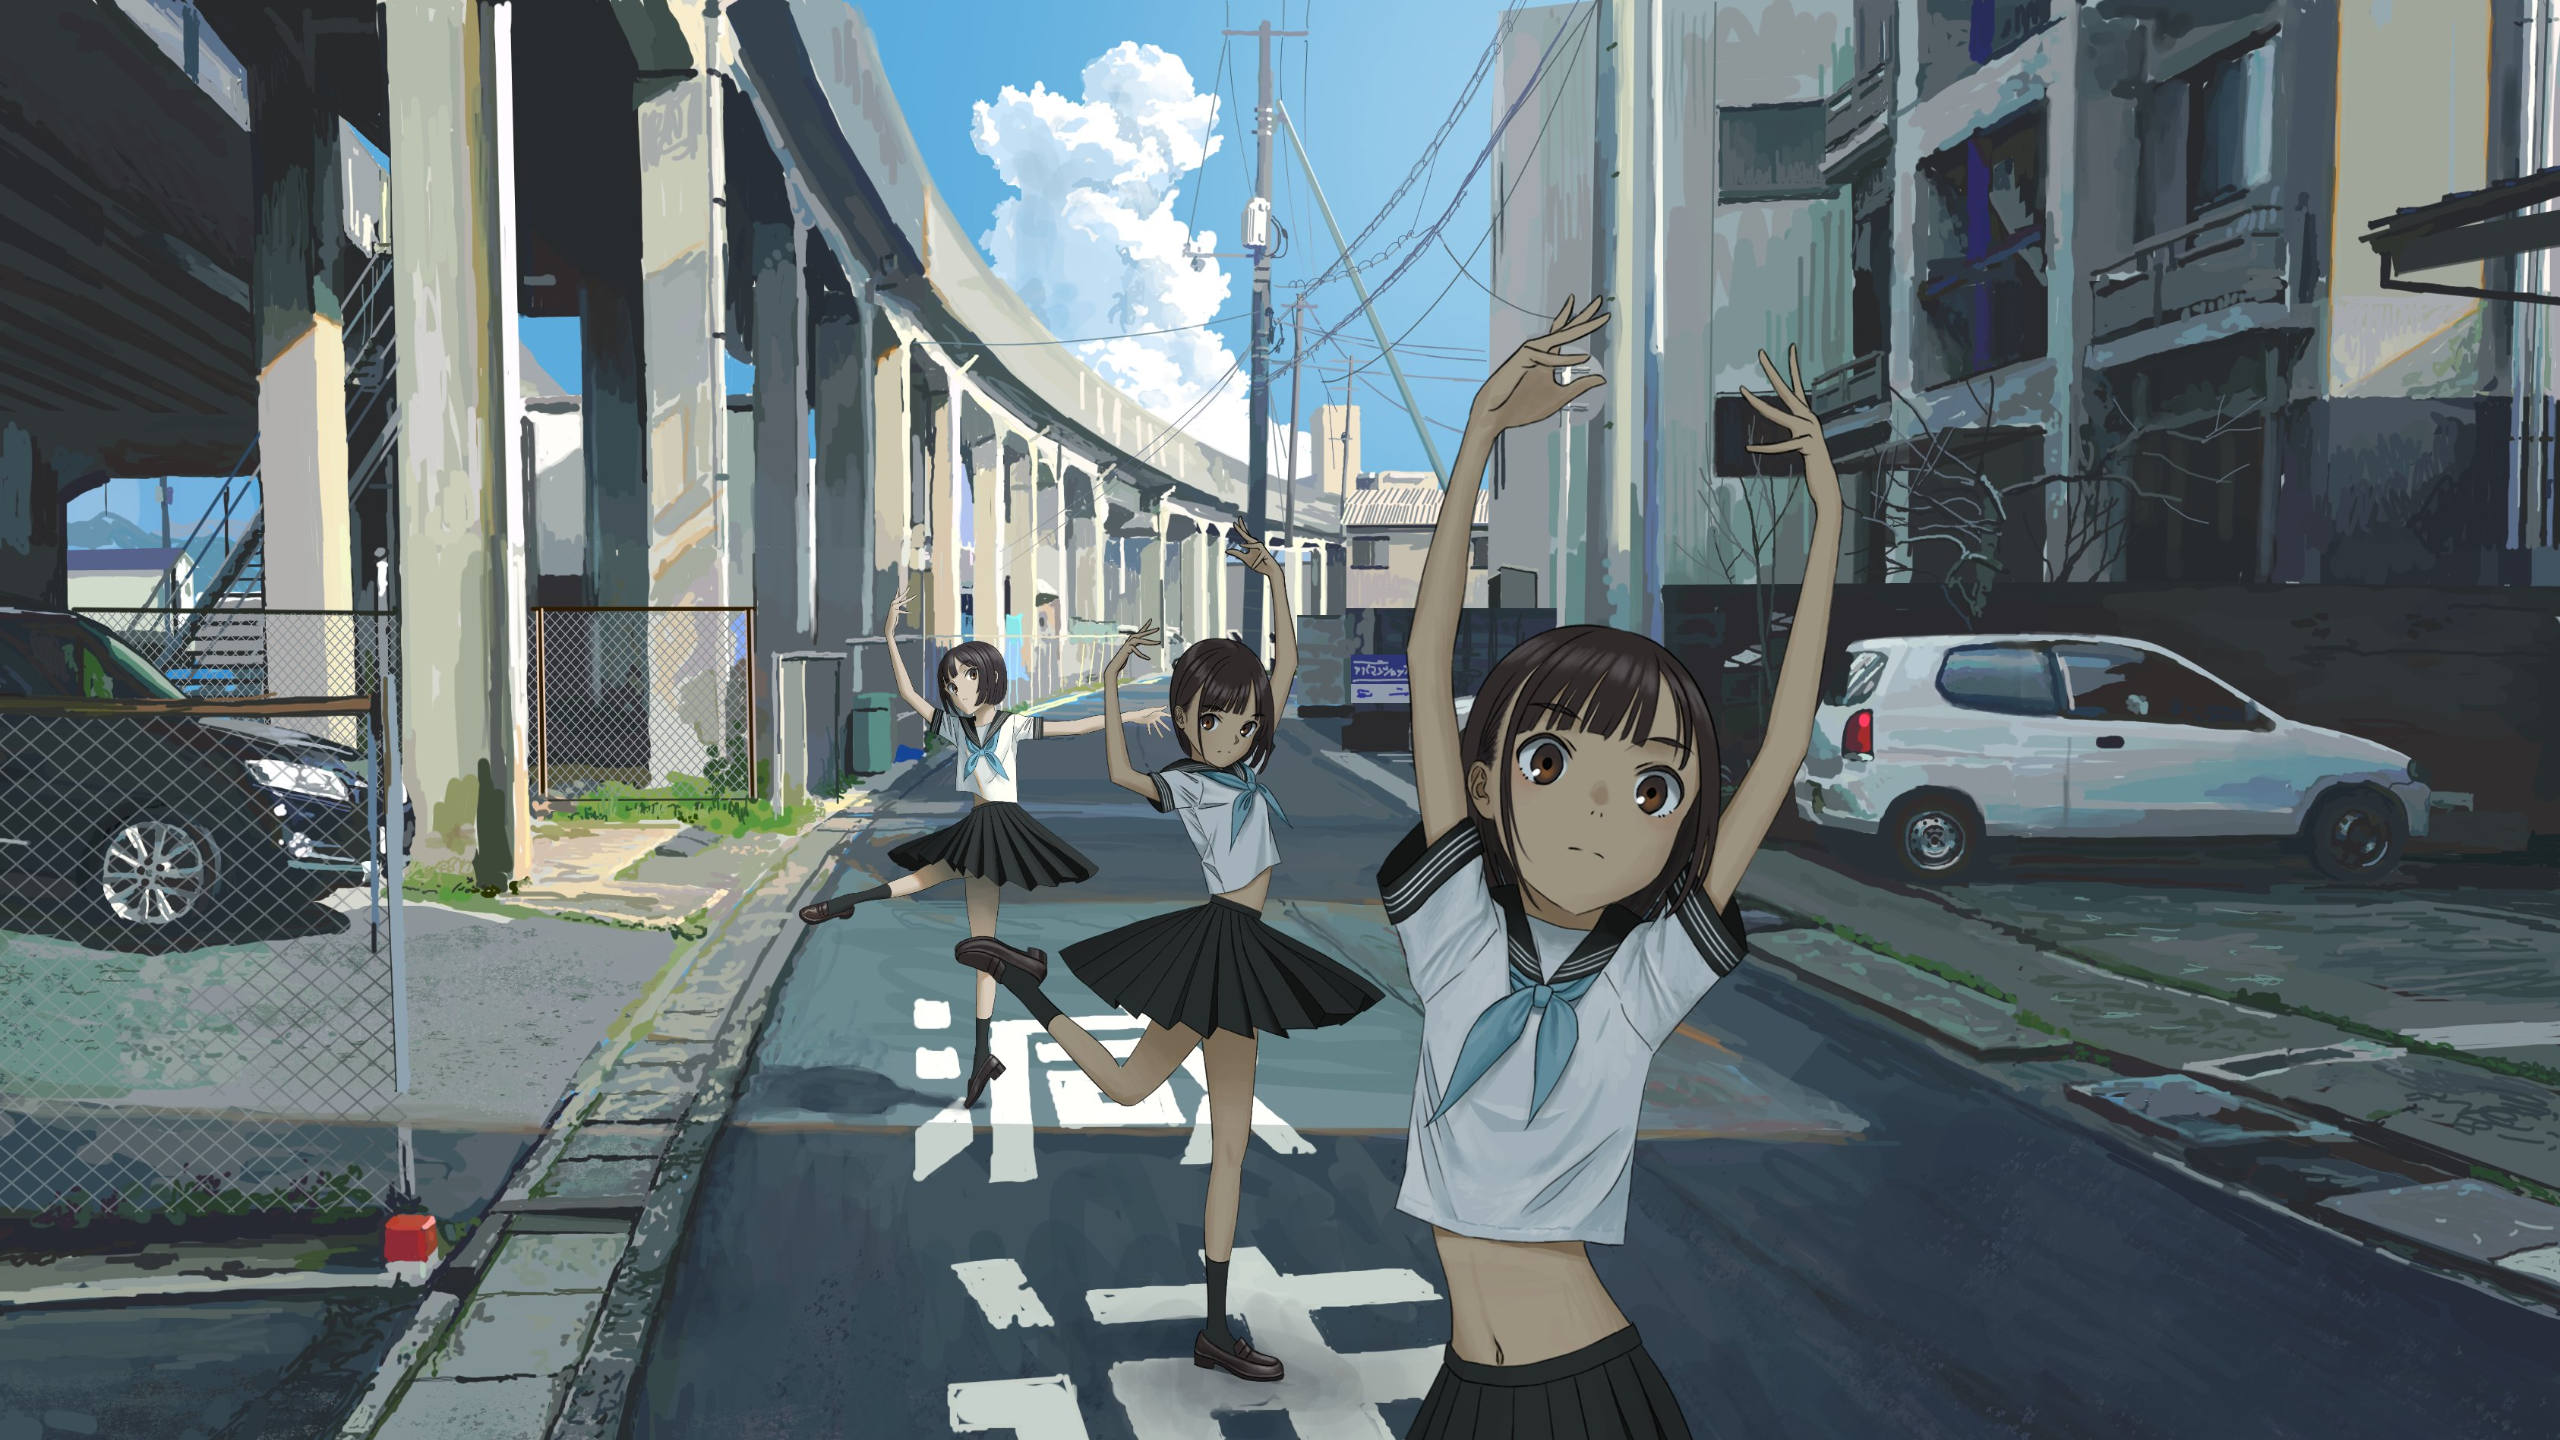 Anime 2560x1440 underpass anime girls anime arms up belly bare midriff brunette legs street urban car